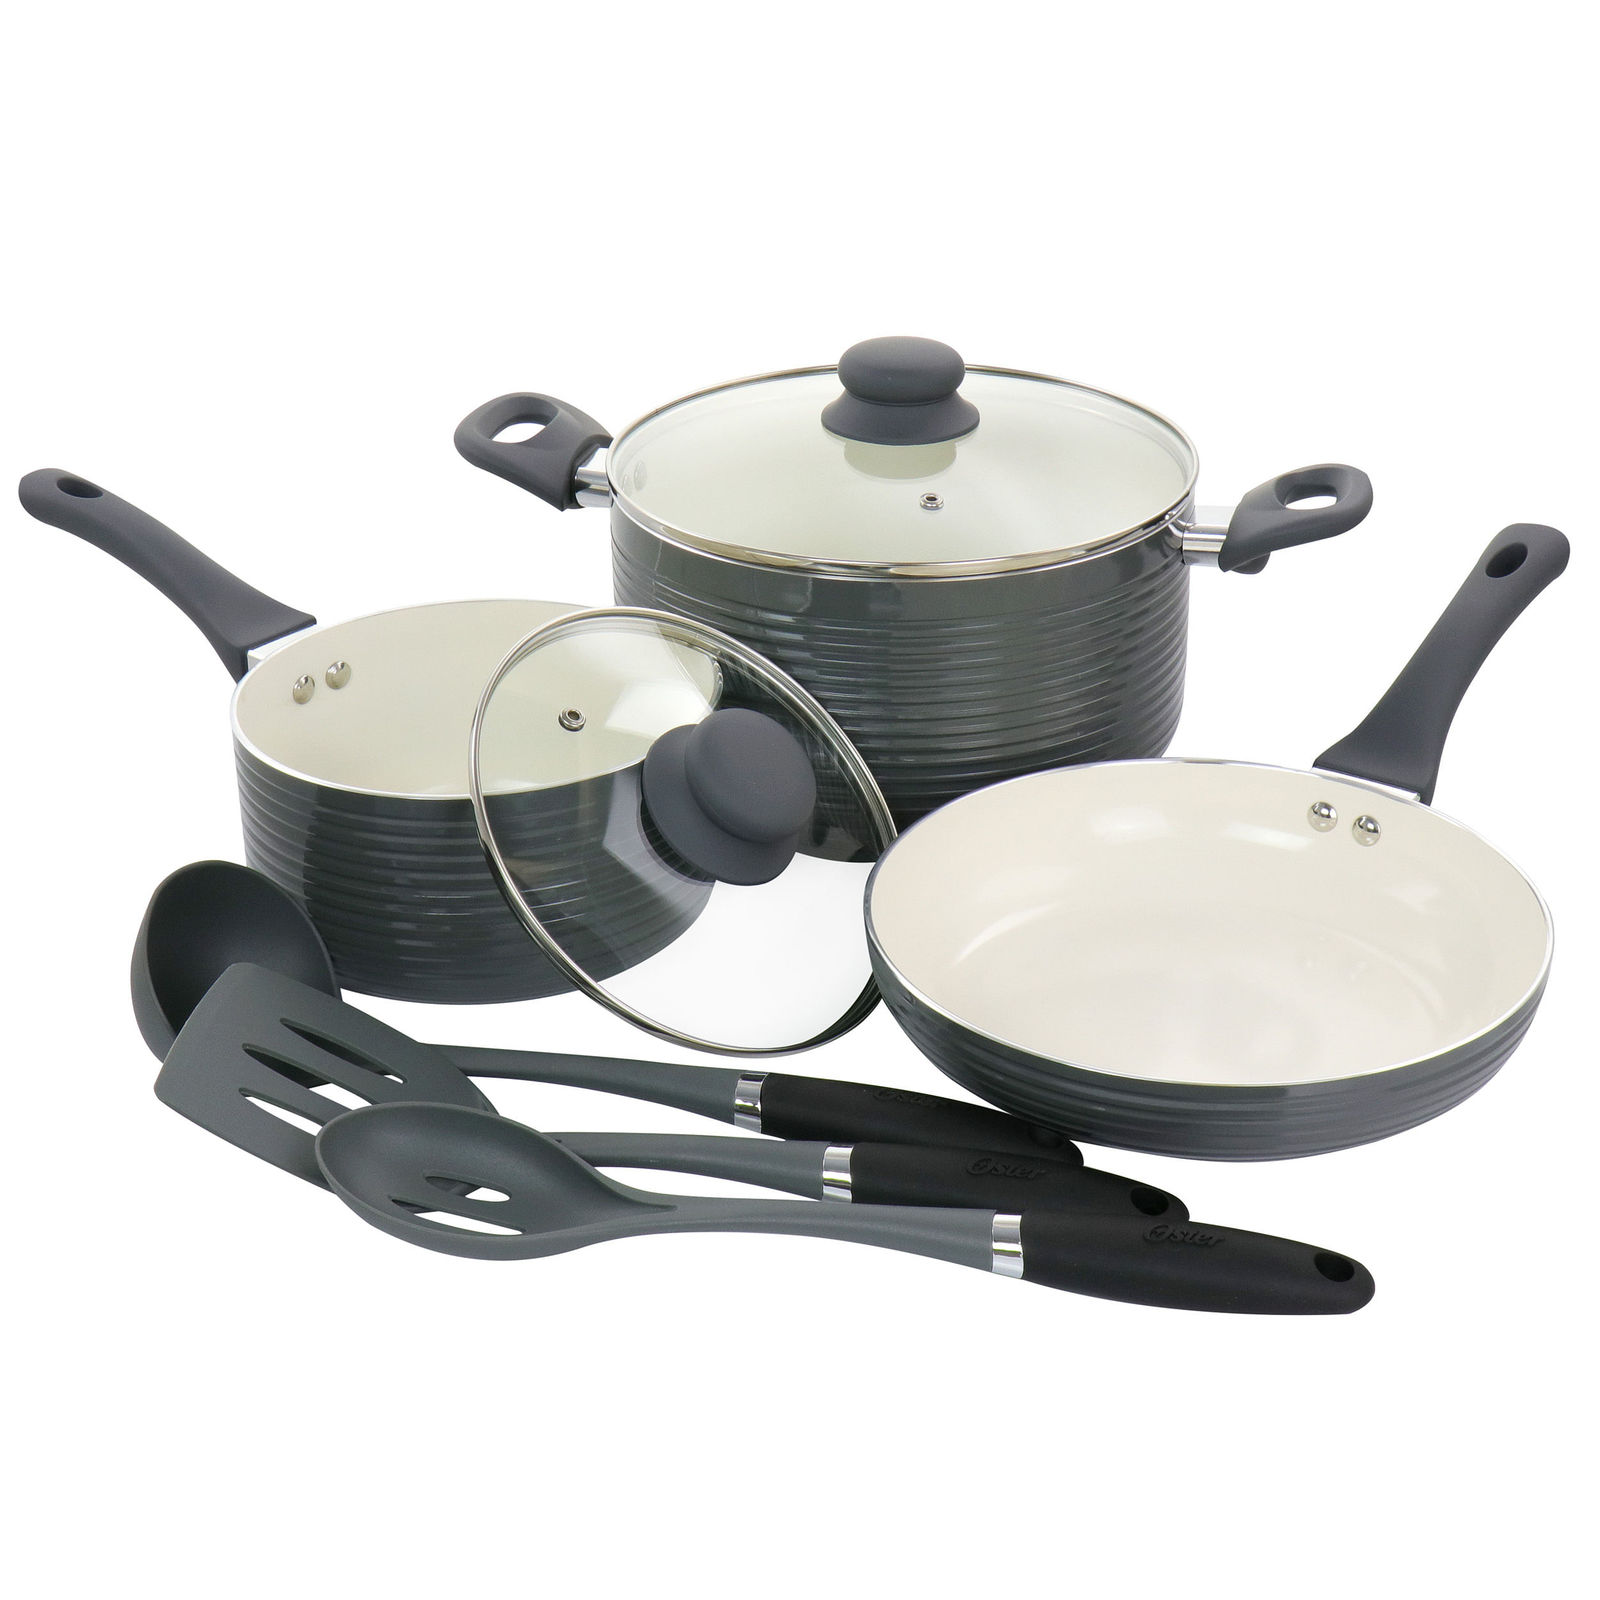 Oster Ridge Valley 8 Piece Aluminum Nonstick Cookware Set in Grey - £89.97 GBP